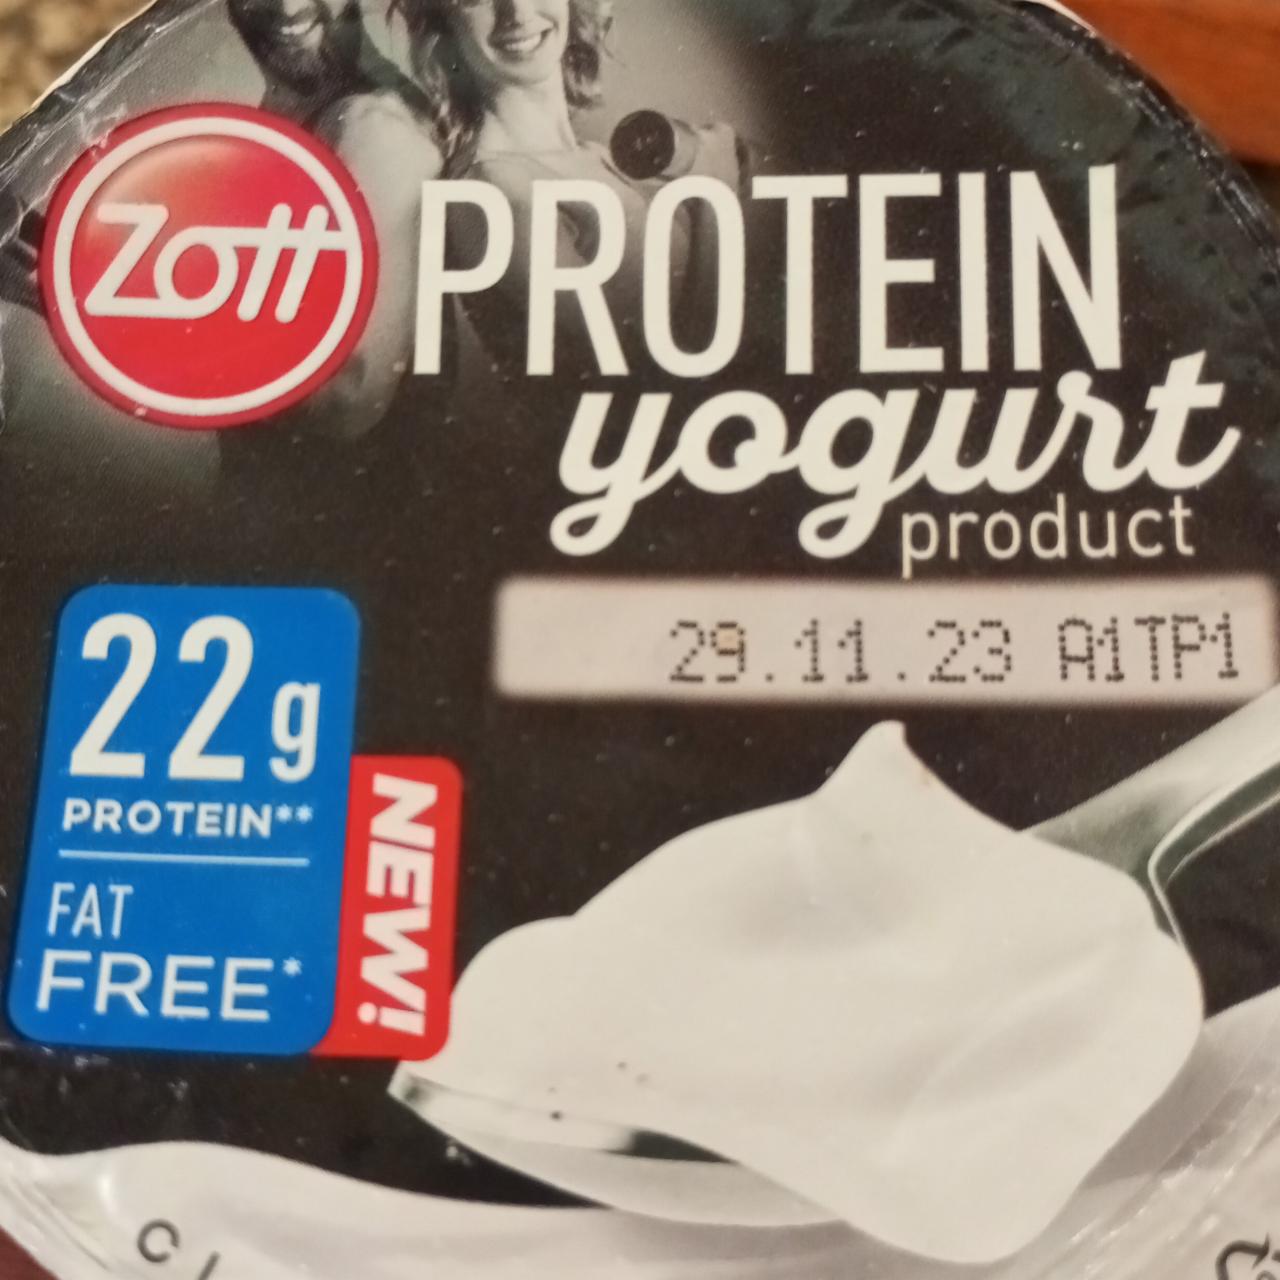 Fotografie - Yogurt product 22g protein Zott